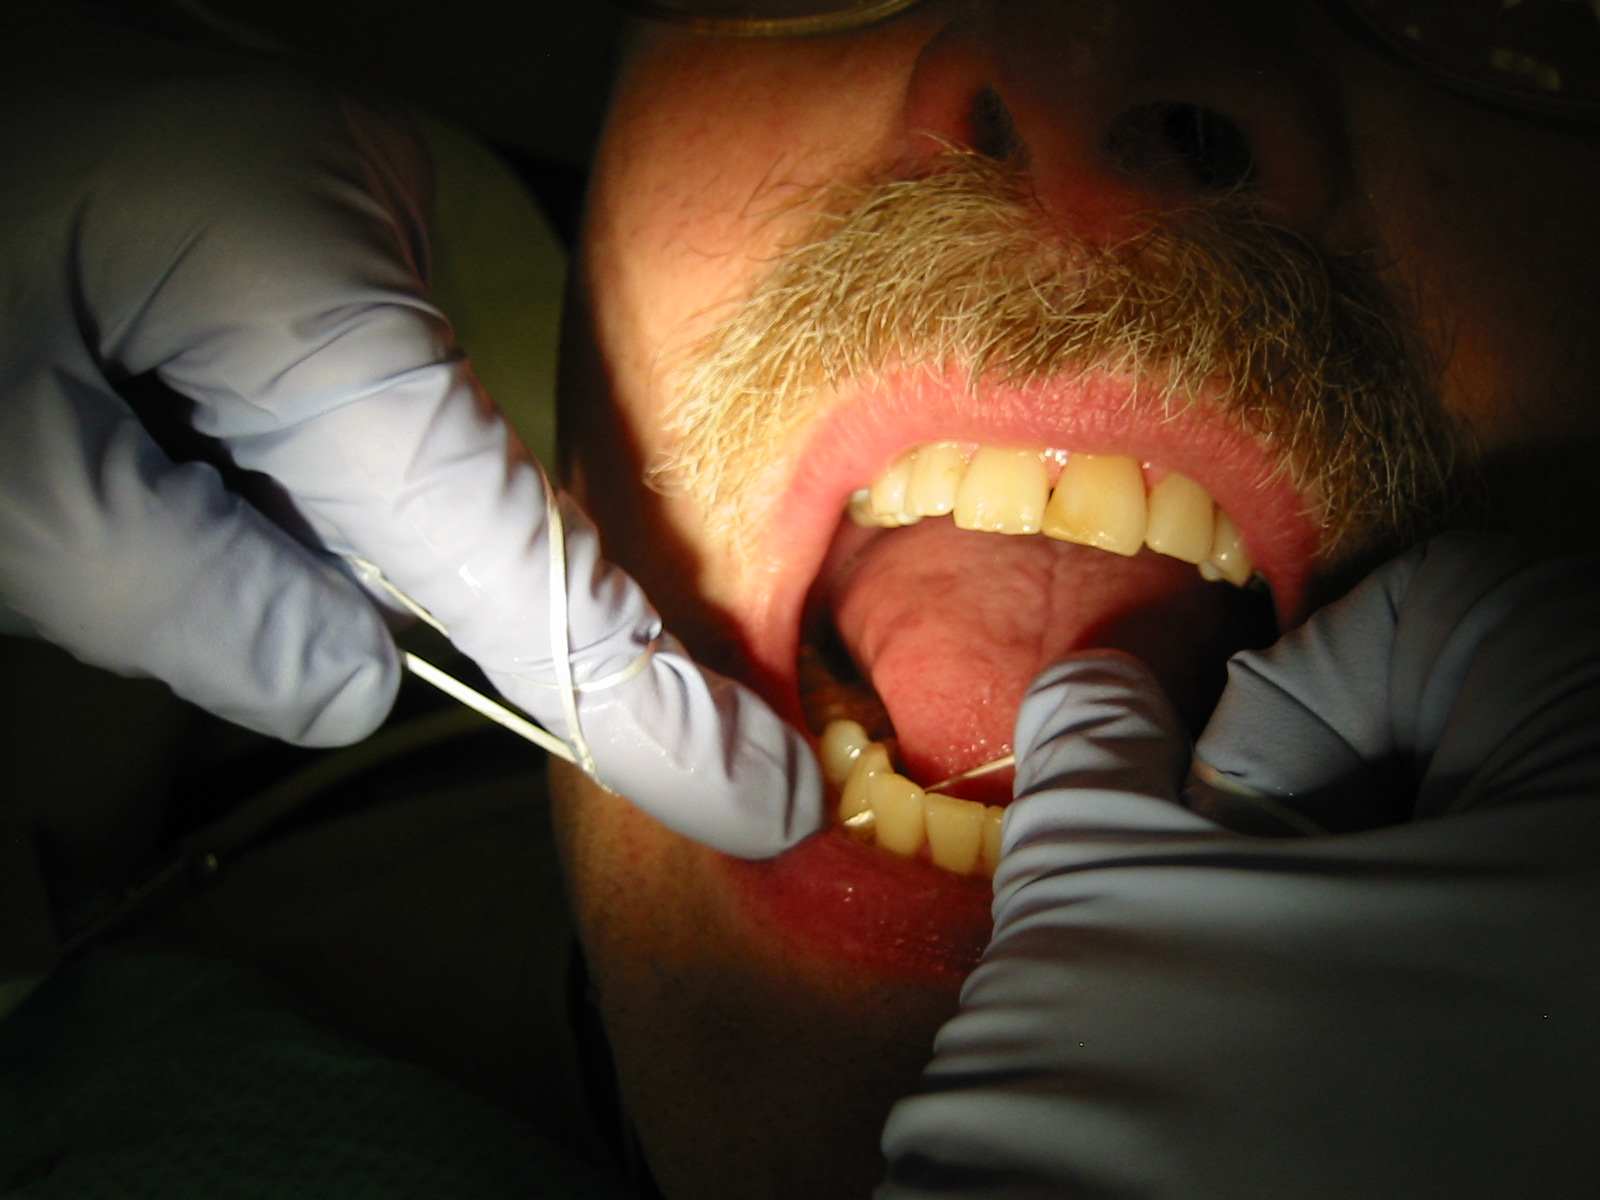 Dental braces - Wikipedia